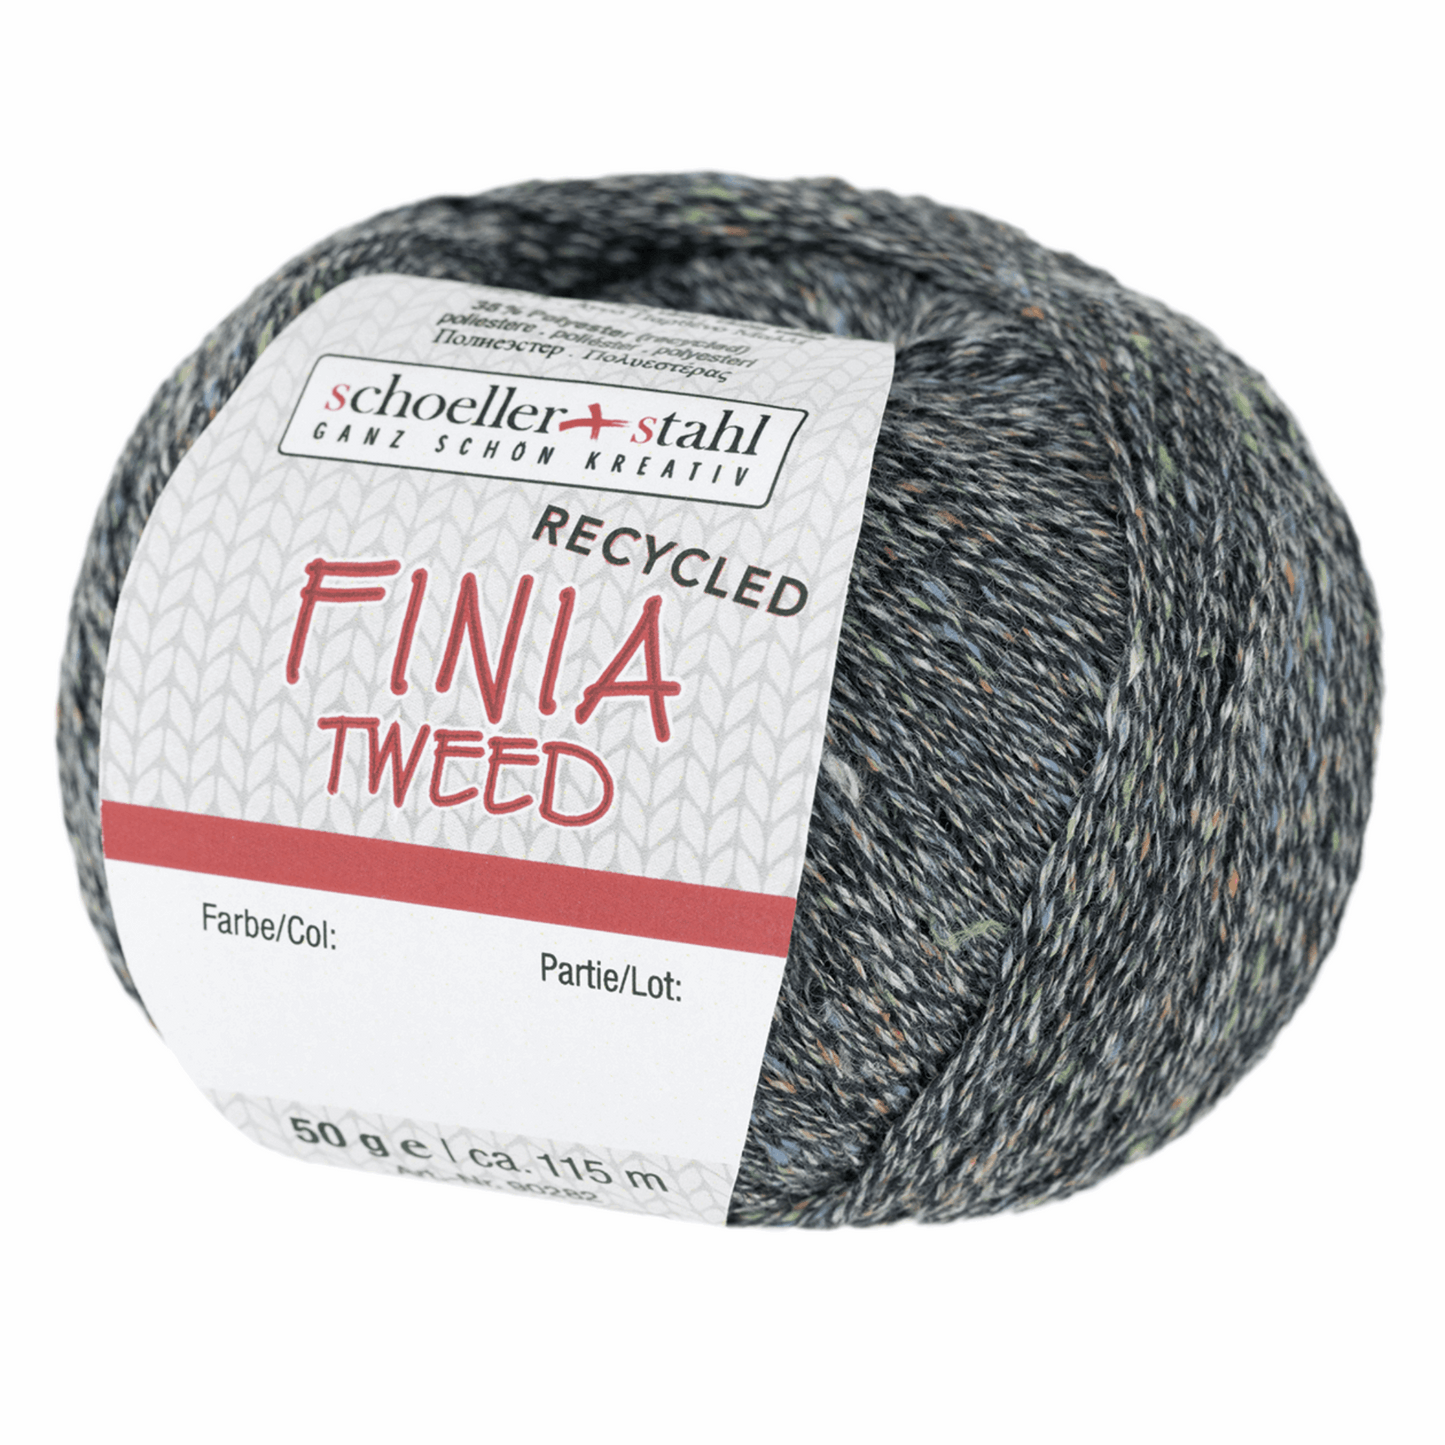 Finia tweed 50g recycled, 90282, Farbe 4, dunkelblau